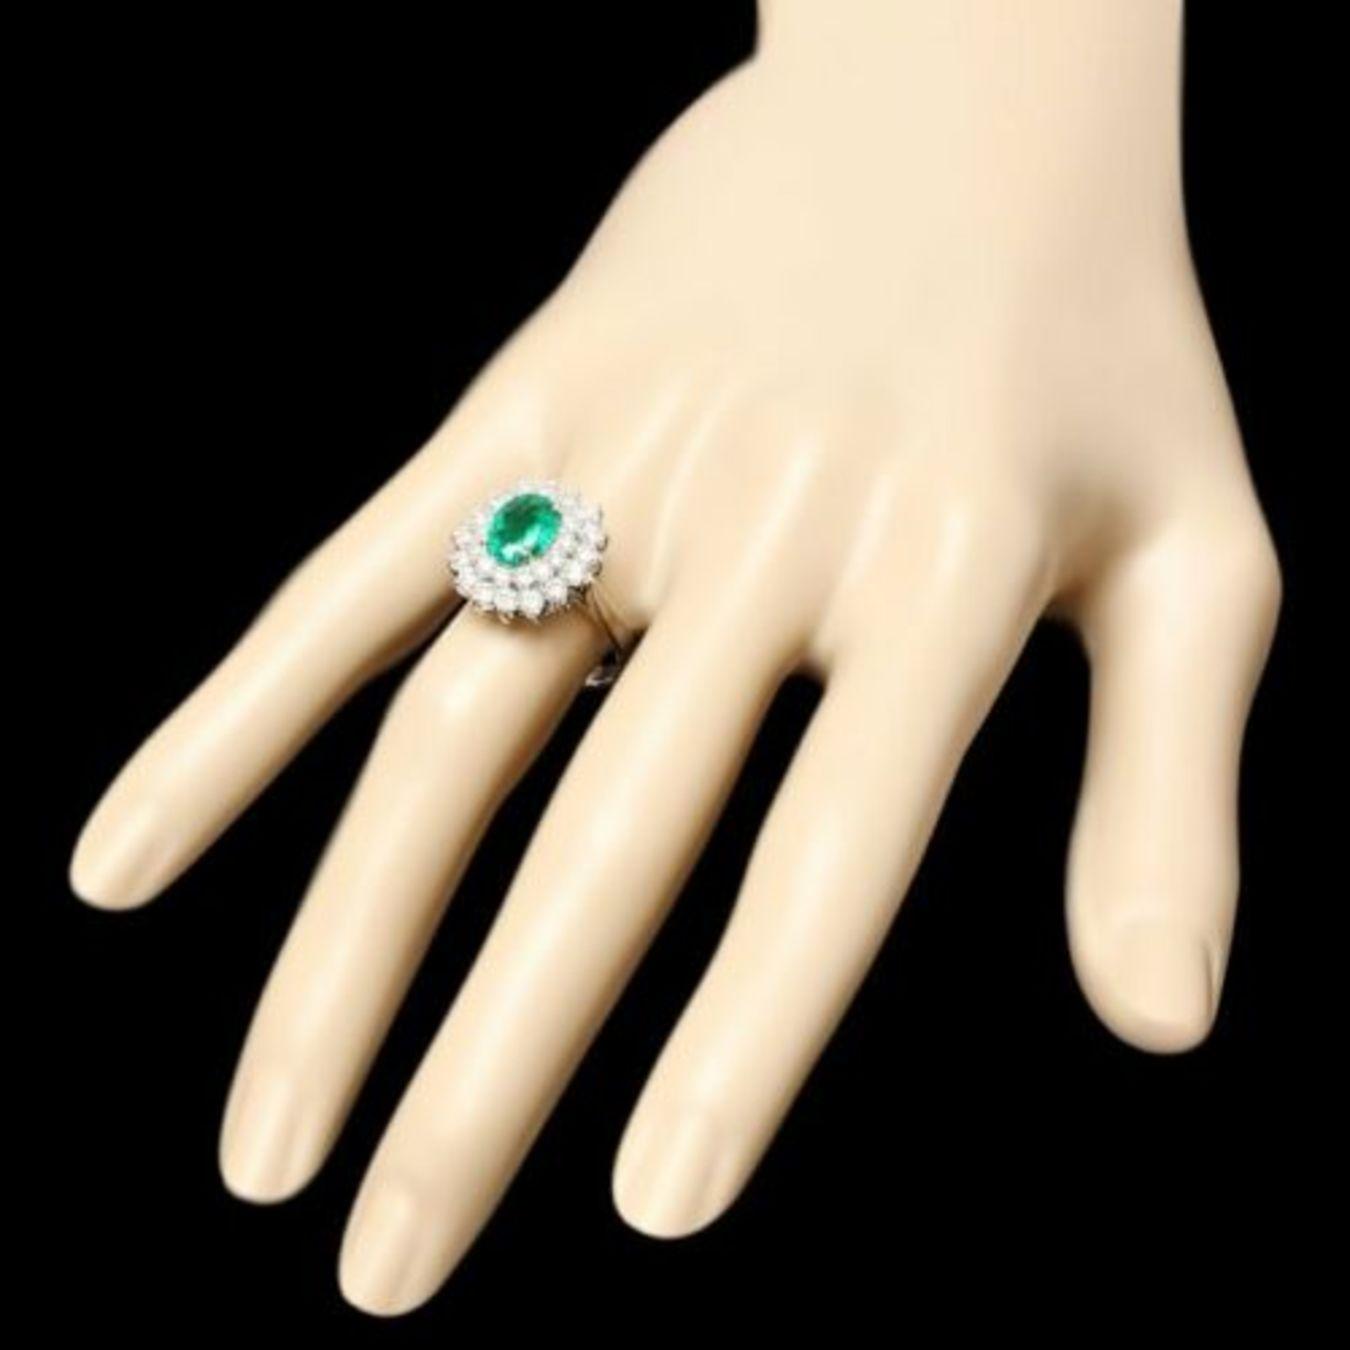 14K White Gold 1.47ct Emerald and 1.32ct Diamond Ring